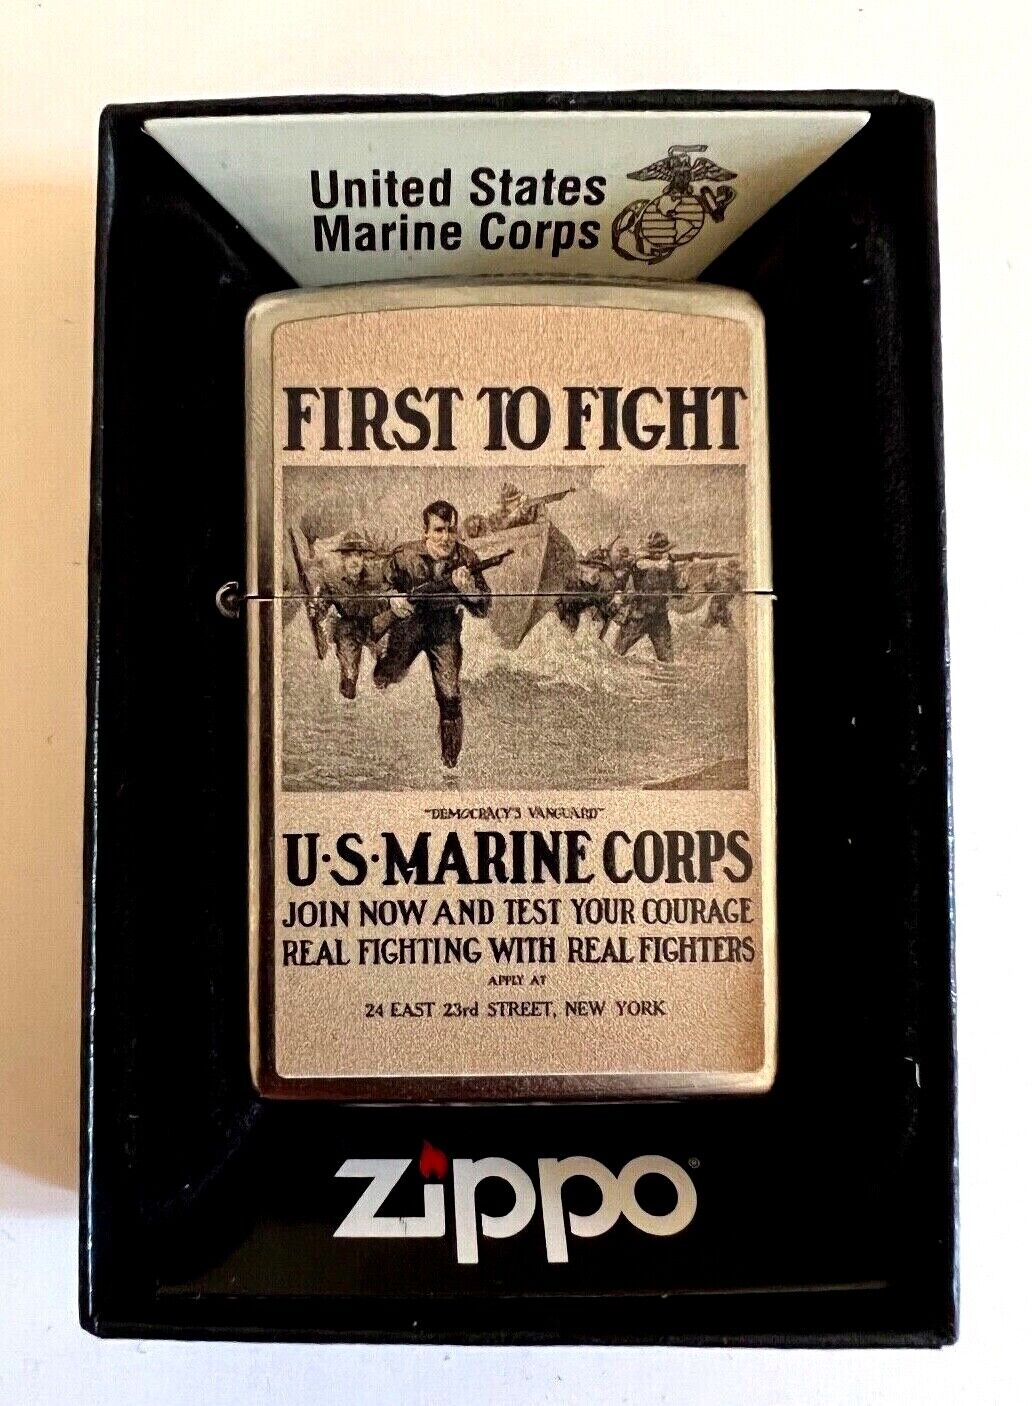 Zippo Windproof U.S. Marine Corp. Lighter, First to Fight, 97253, New In Box